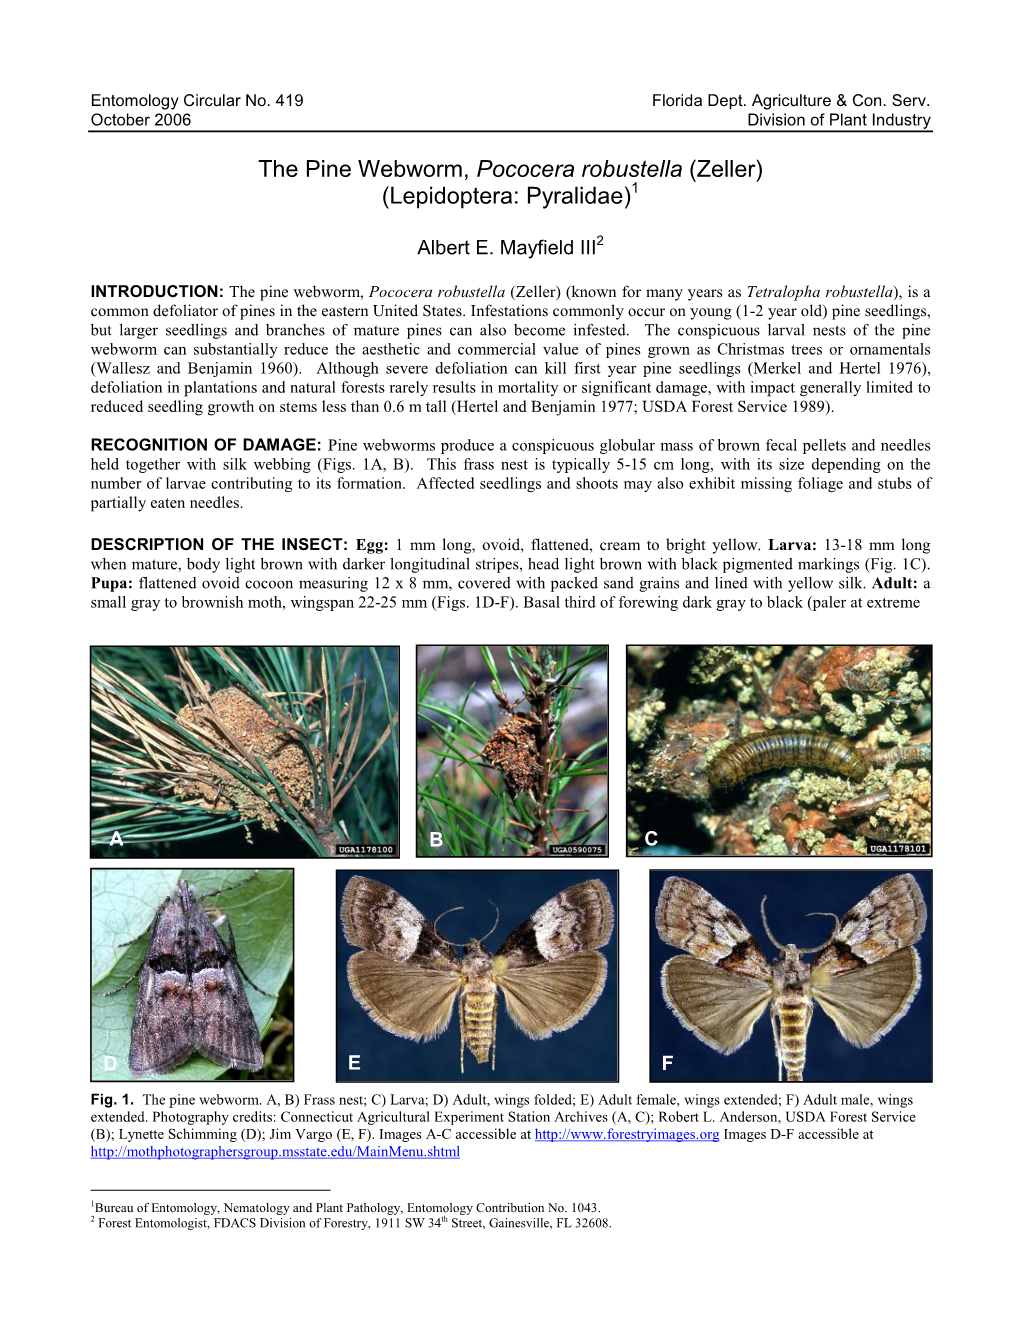 The Pine Webworm, Pococera Robustella (Zeller) (Lepidoptera: Pyralidae)1